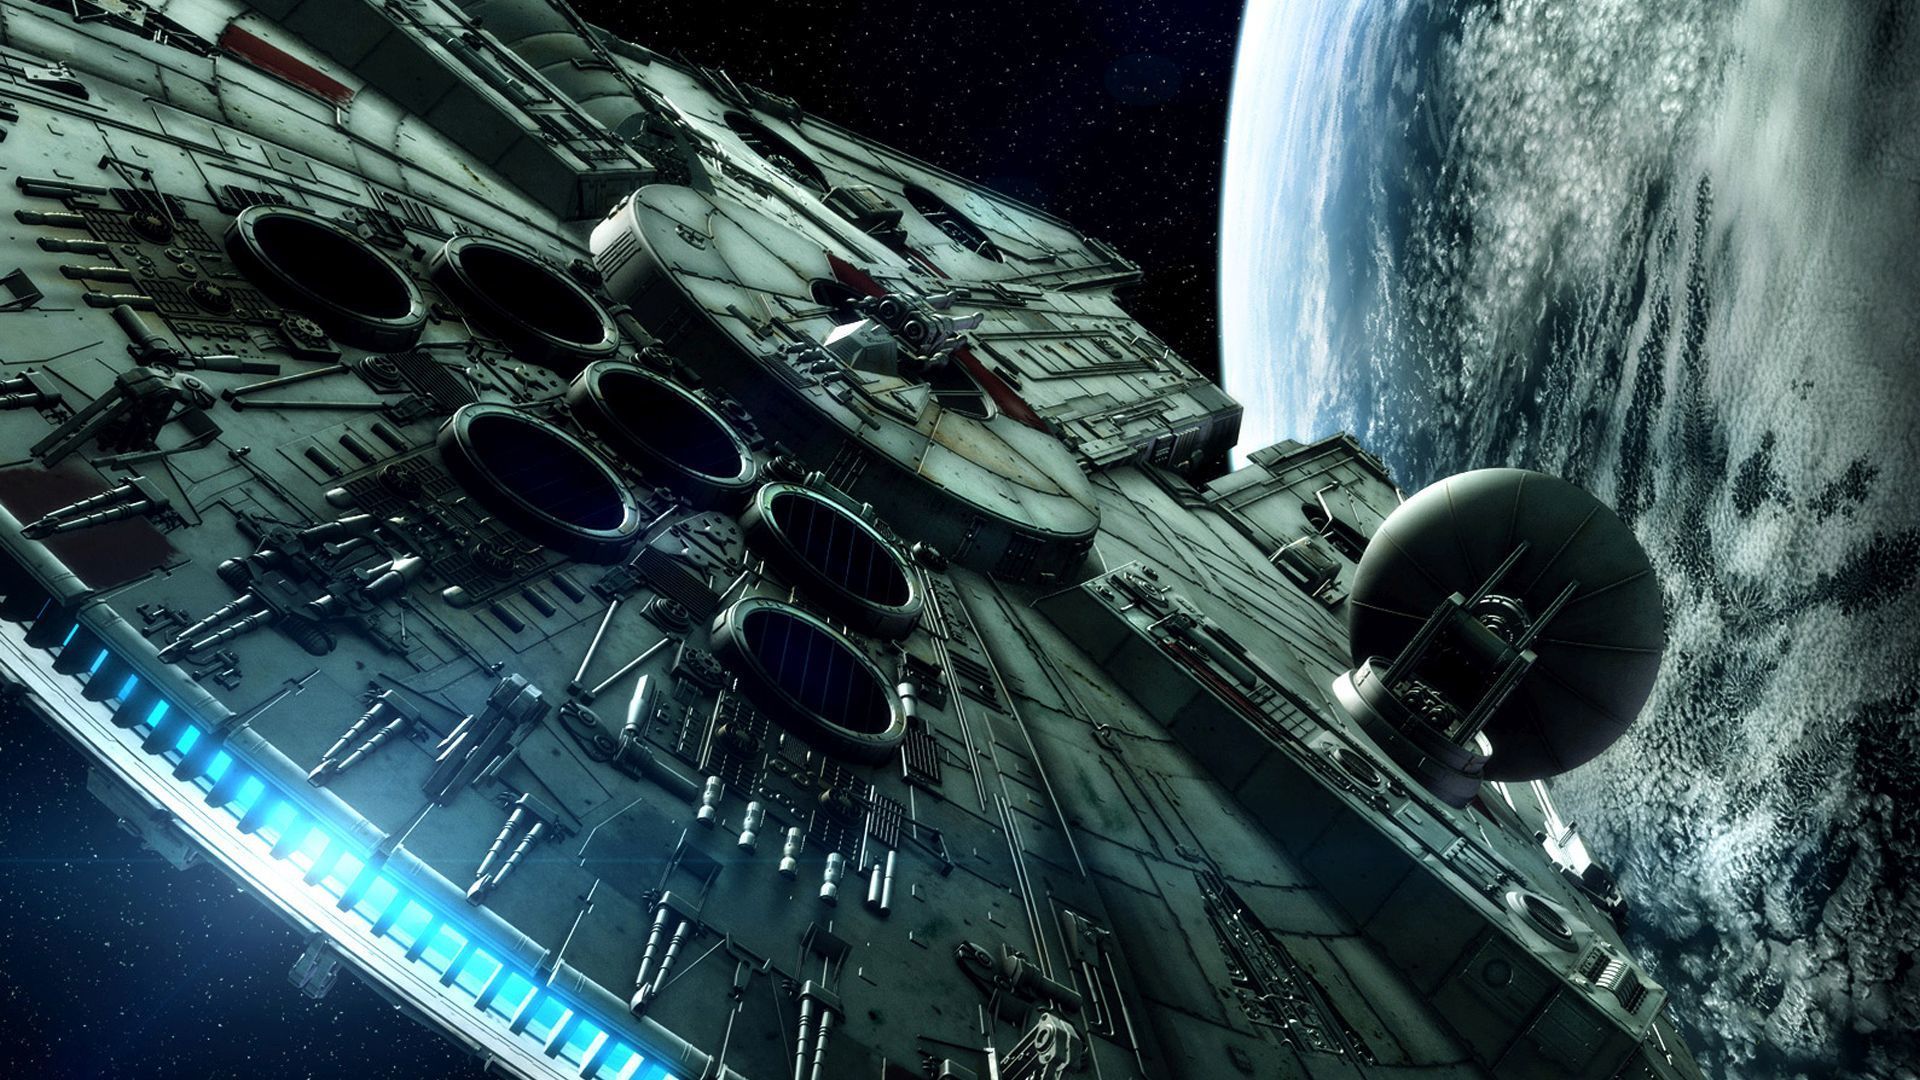 star-wars-spaceship-1080p-movie-desktop-wallpaper-25496.jpg